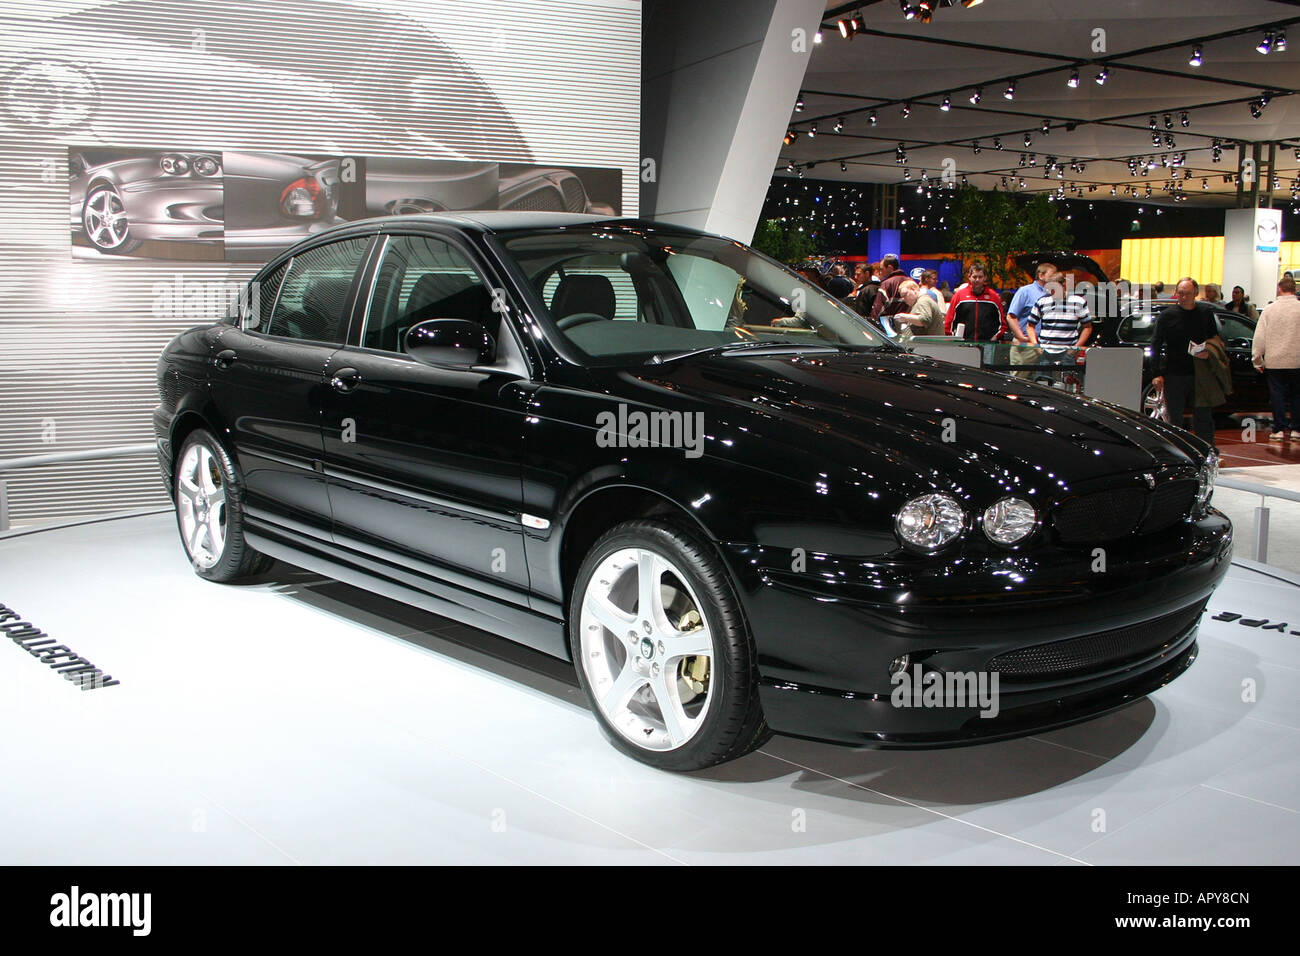 Black Jaguar on display at Motor Show Stock Photo